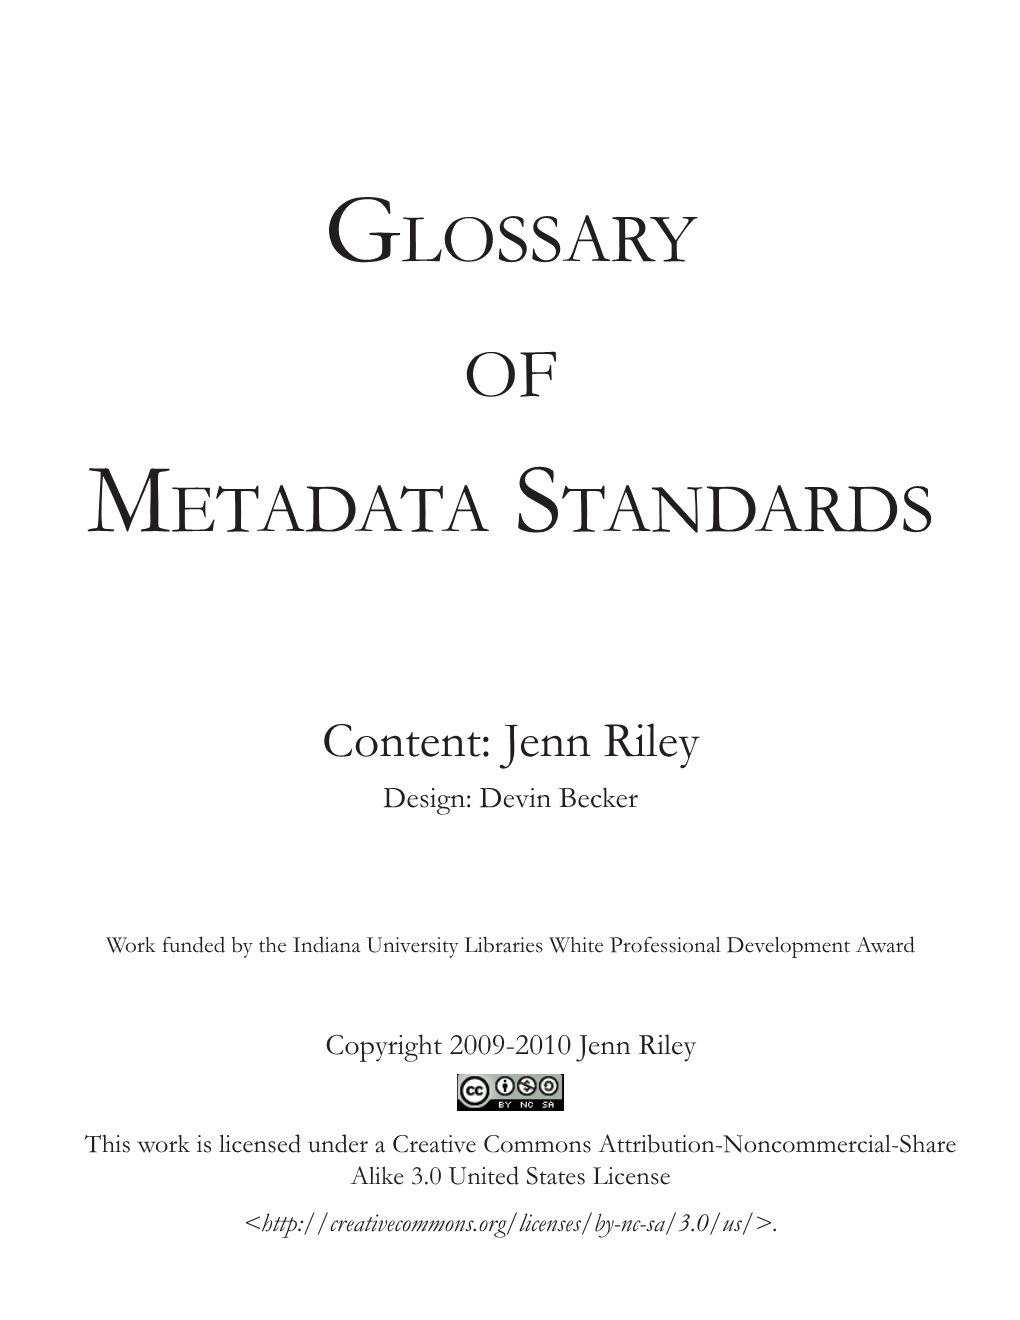 Glossary of Metadata Standards